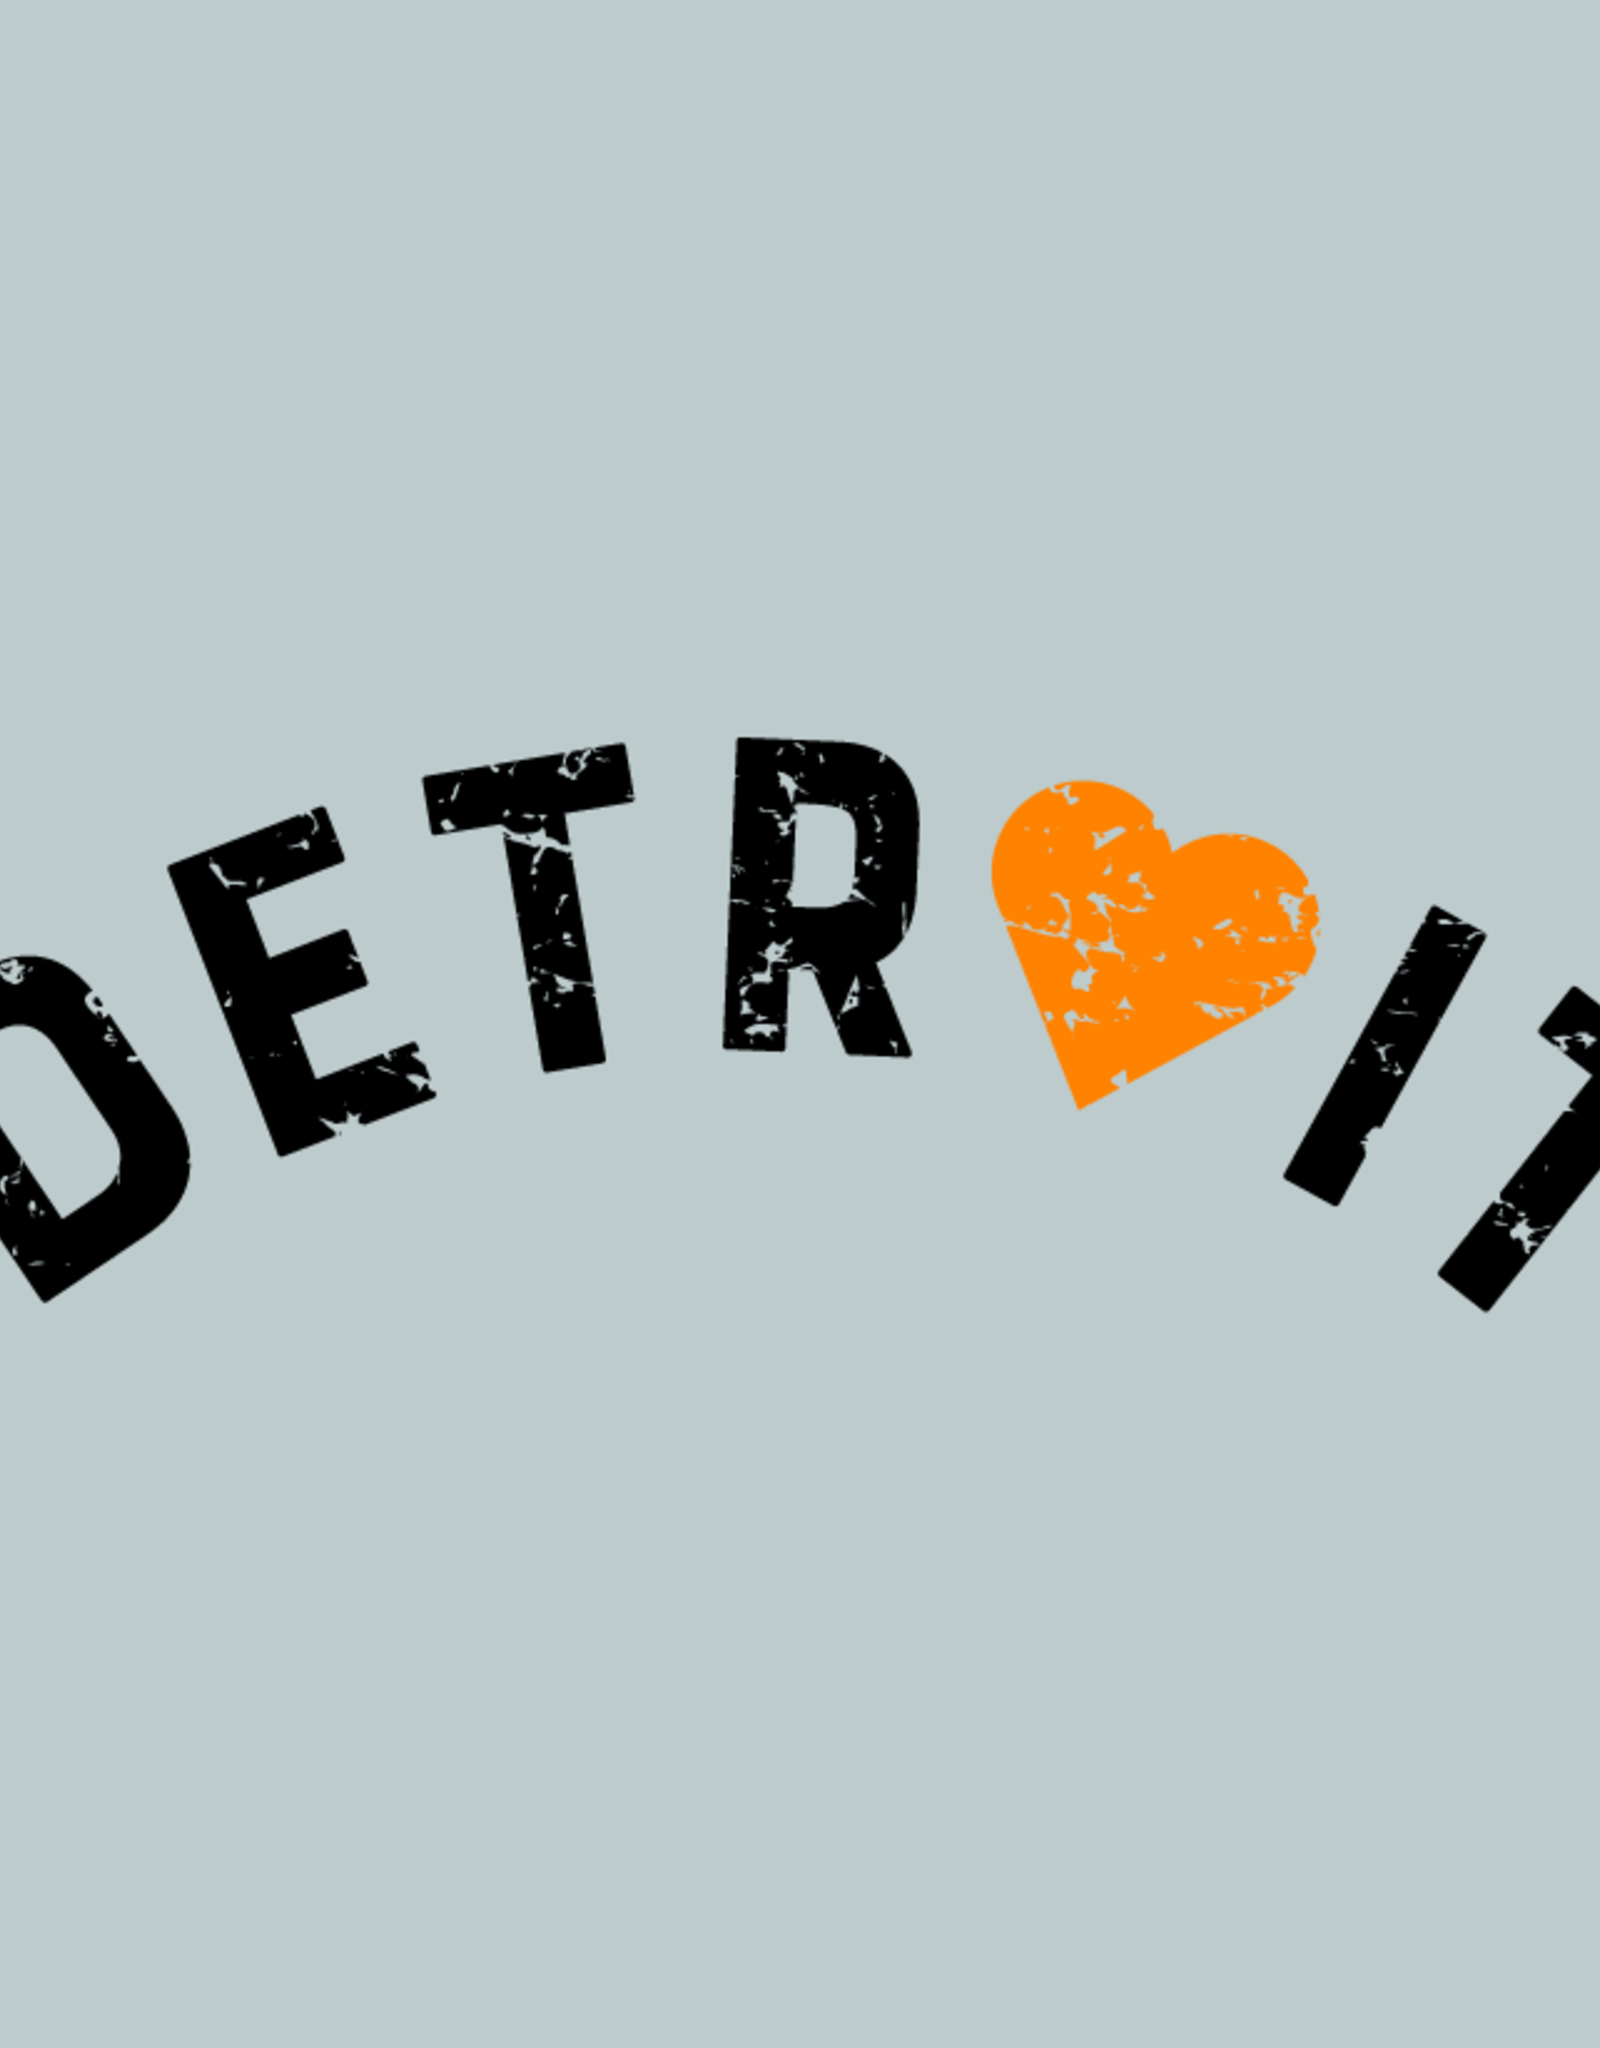 Detroit Heart